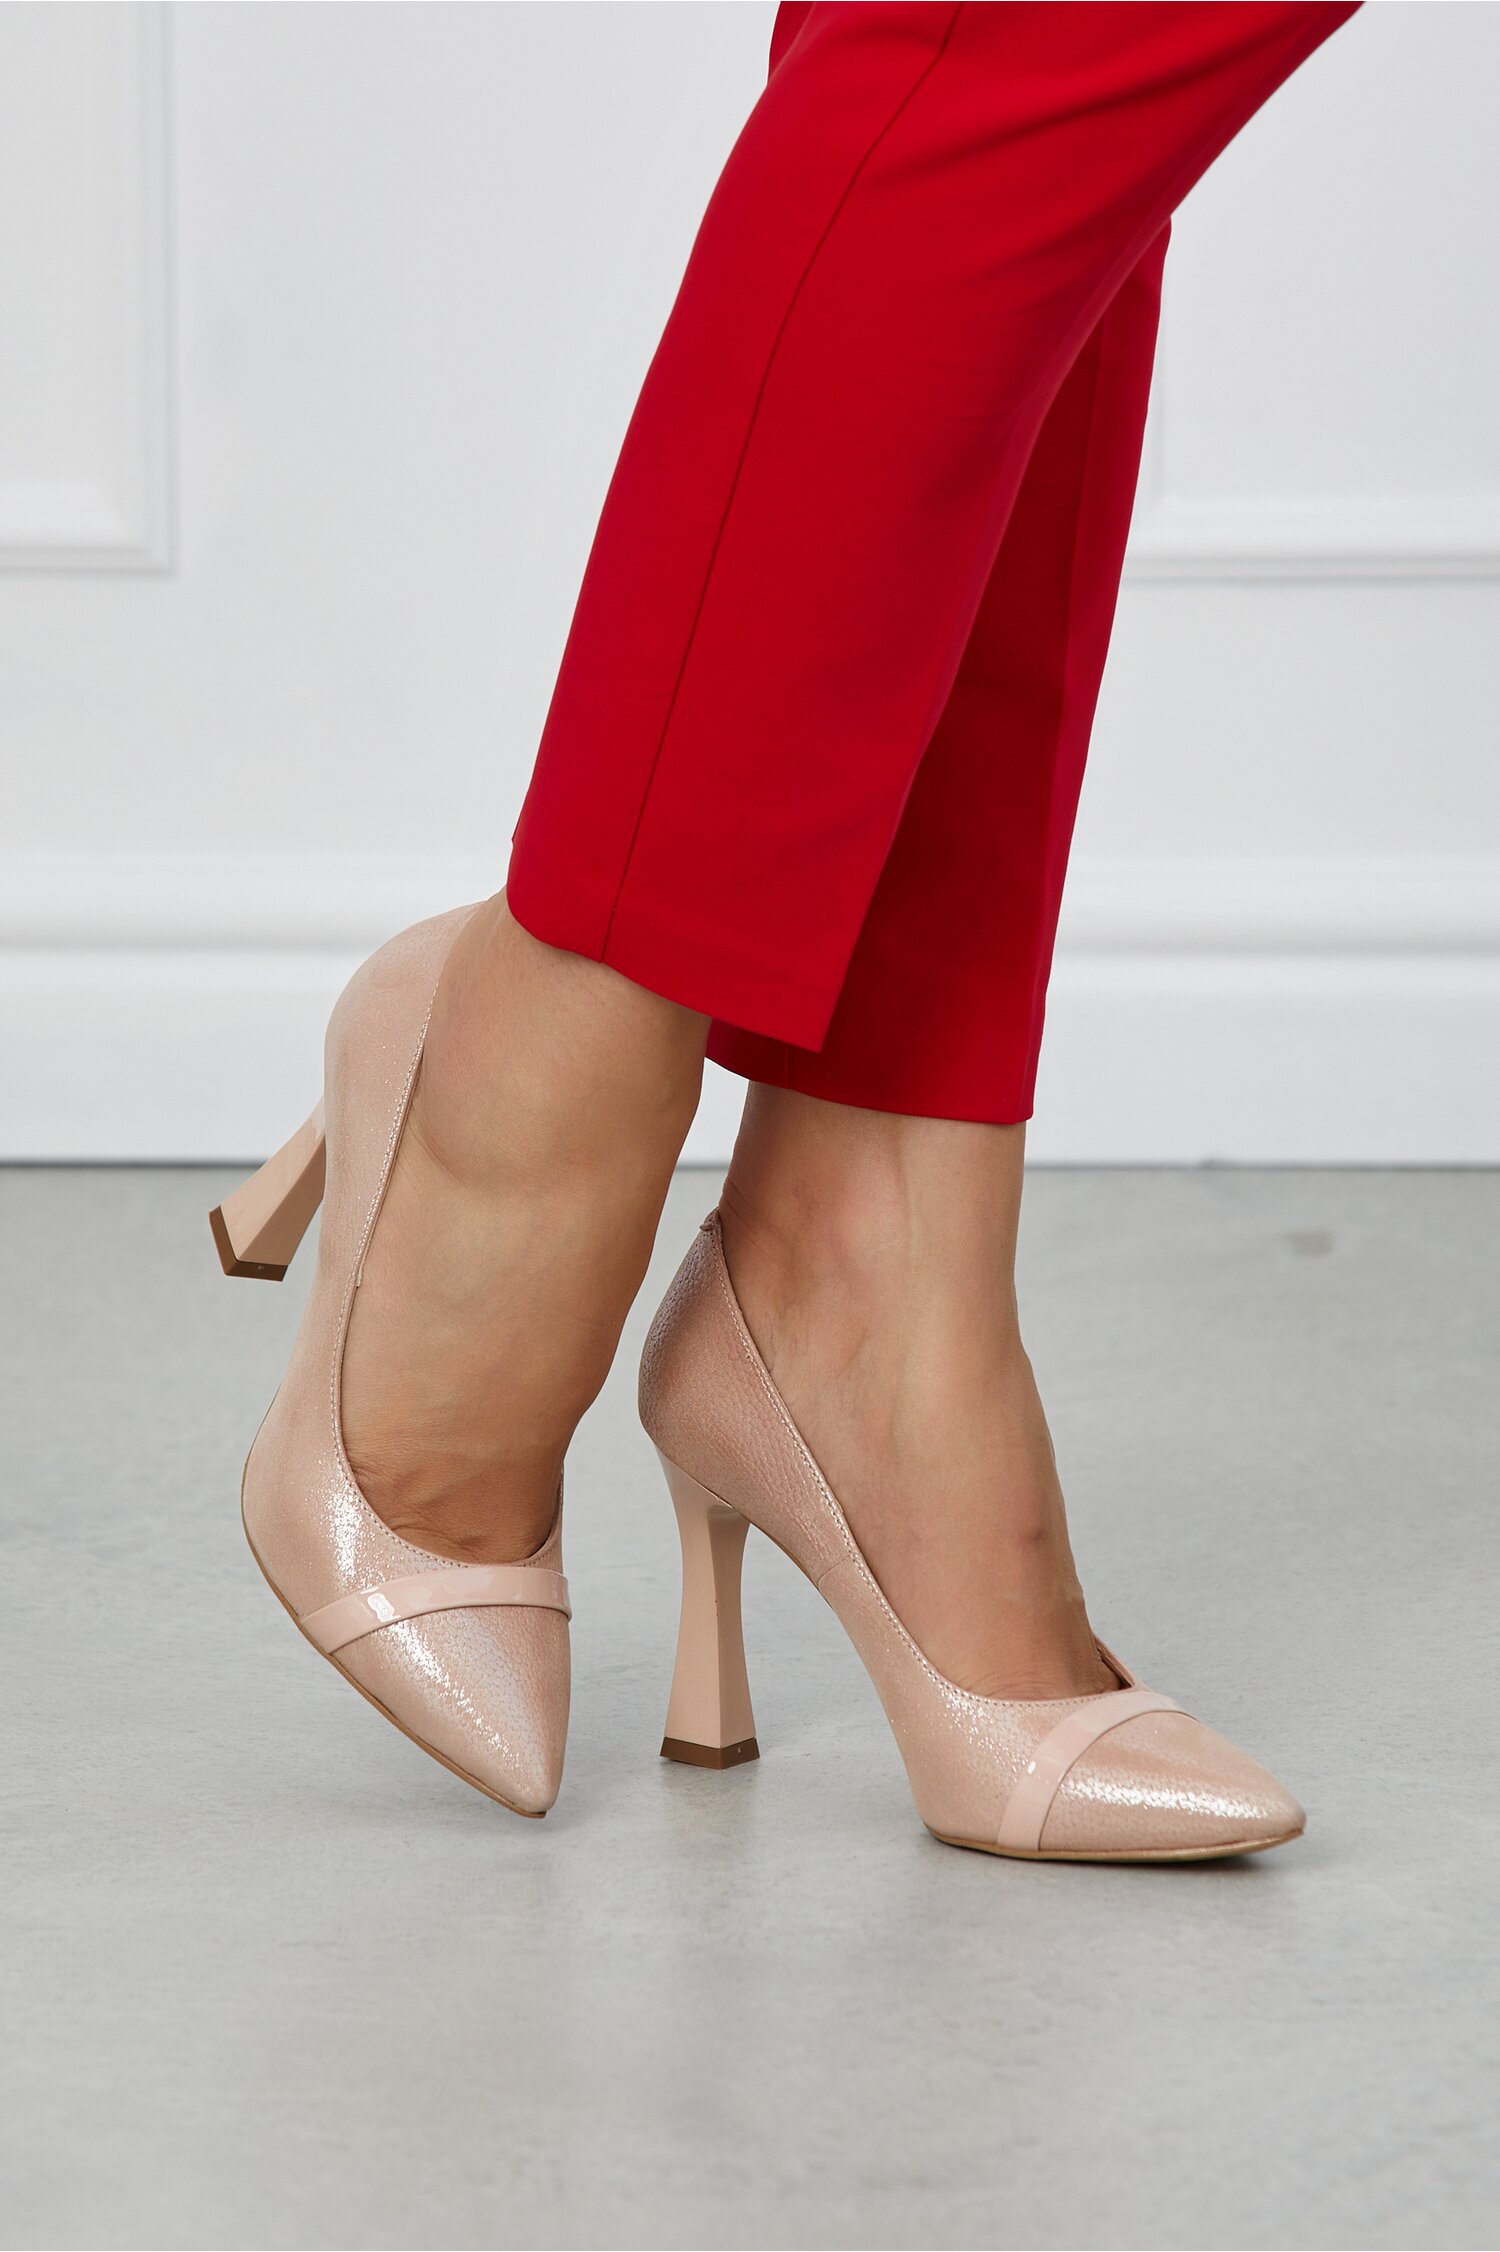 Pantofi Olga roz cu banda lucioasa pe varf dyfashion.ro imagine 2022 13clothing.ro